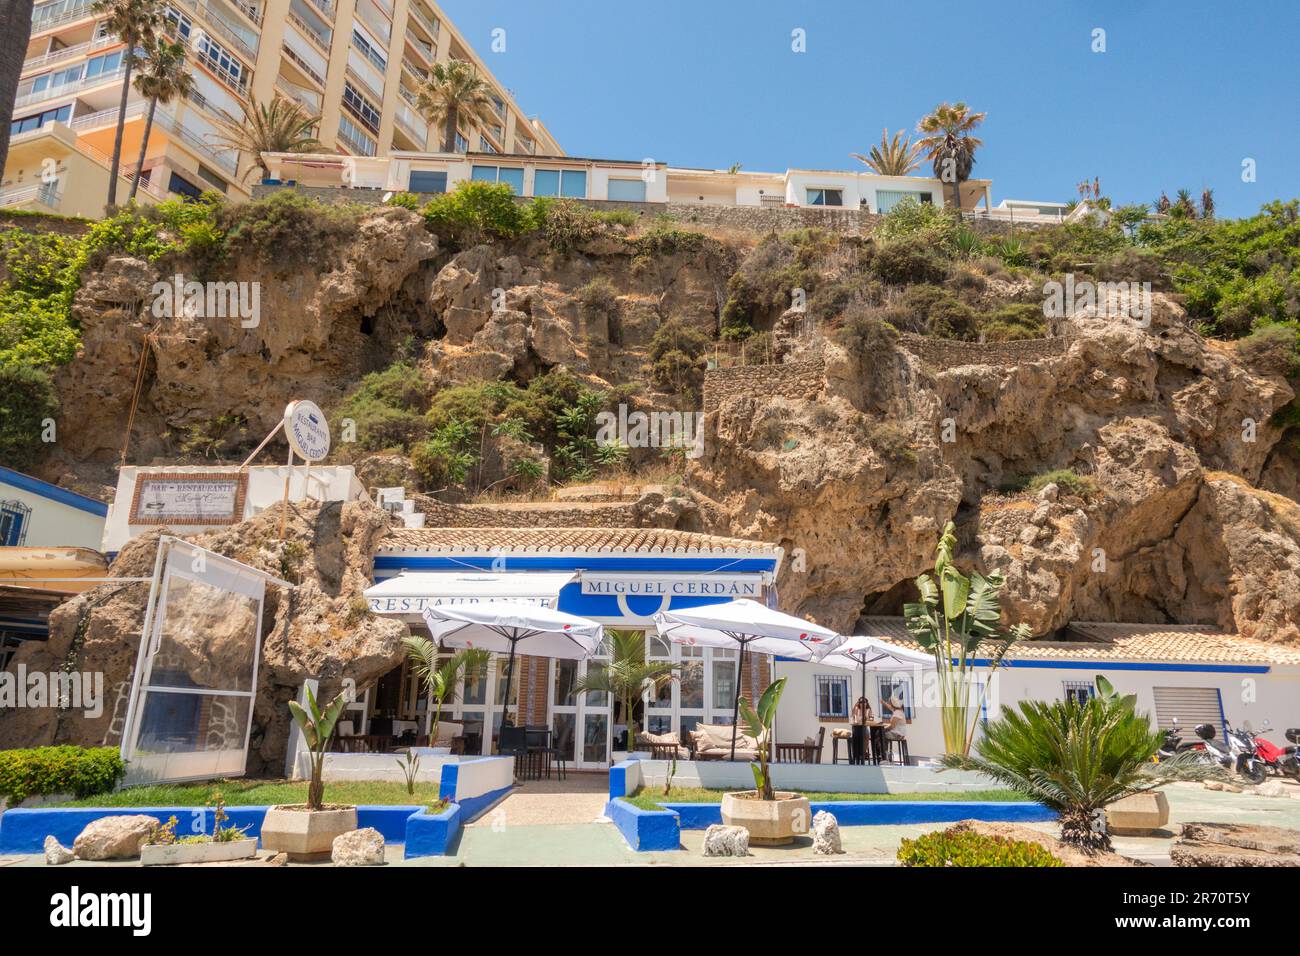 Restaurant de plage de style espagnol à falaise, Torremolinos, Costa del sol, Malaga, Espagne. Banque D'Images